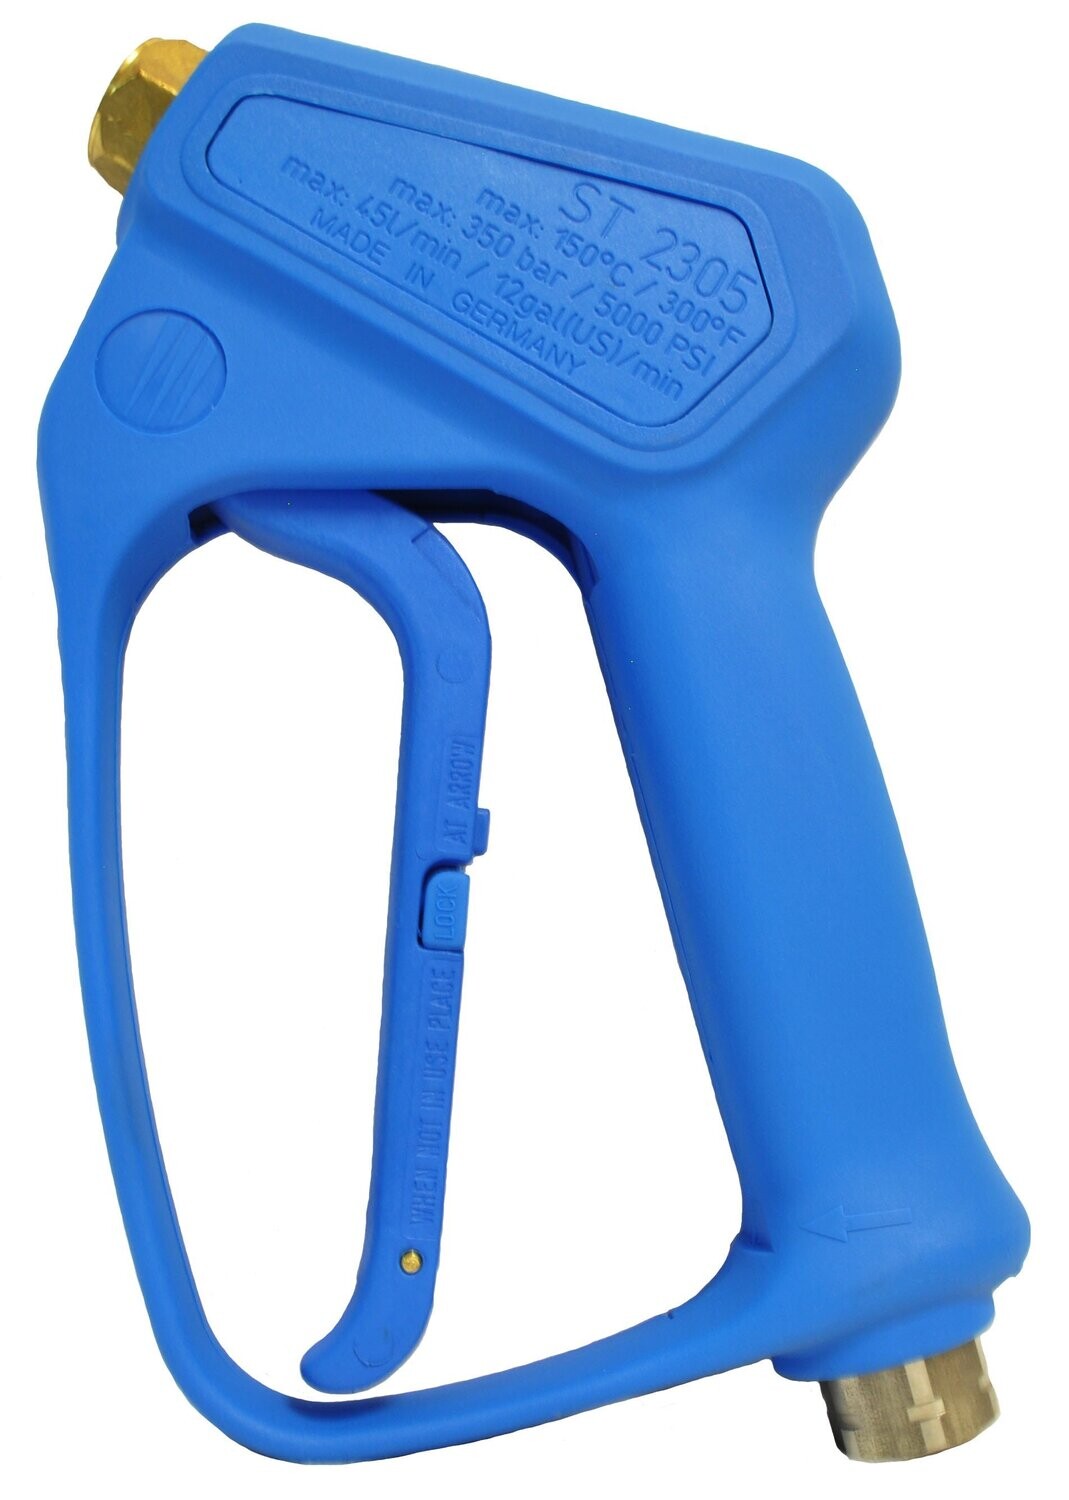 Easy to Pull Blue ​Industrial Suttner Pressure Washer Trigger Spray Gun 5000 PSI 12 GPM model (ST-2305)